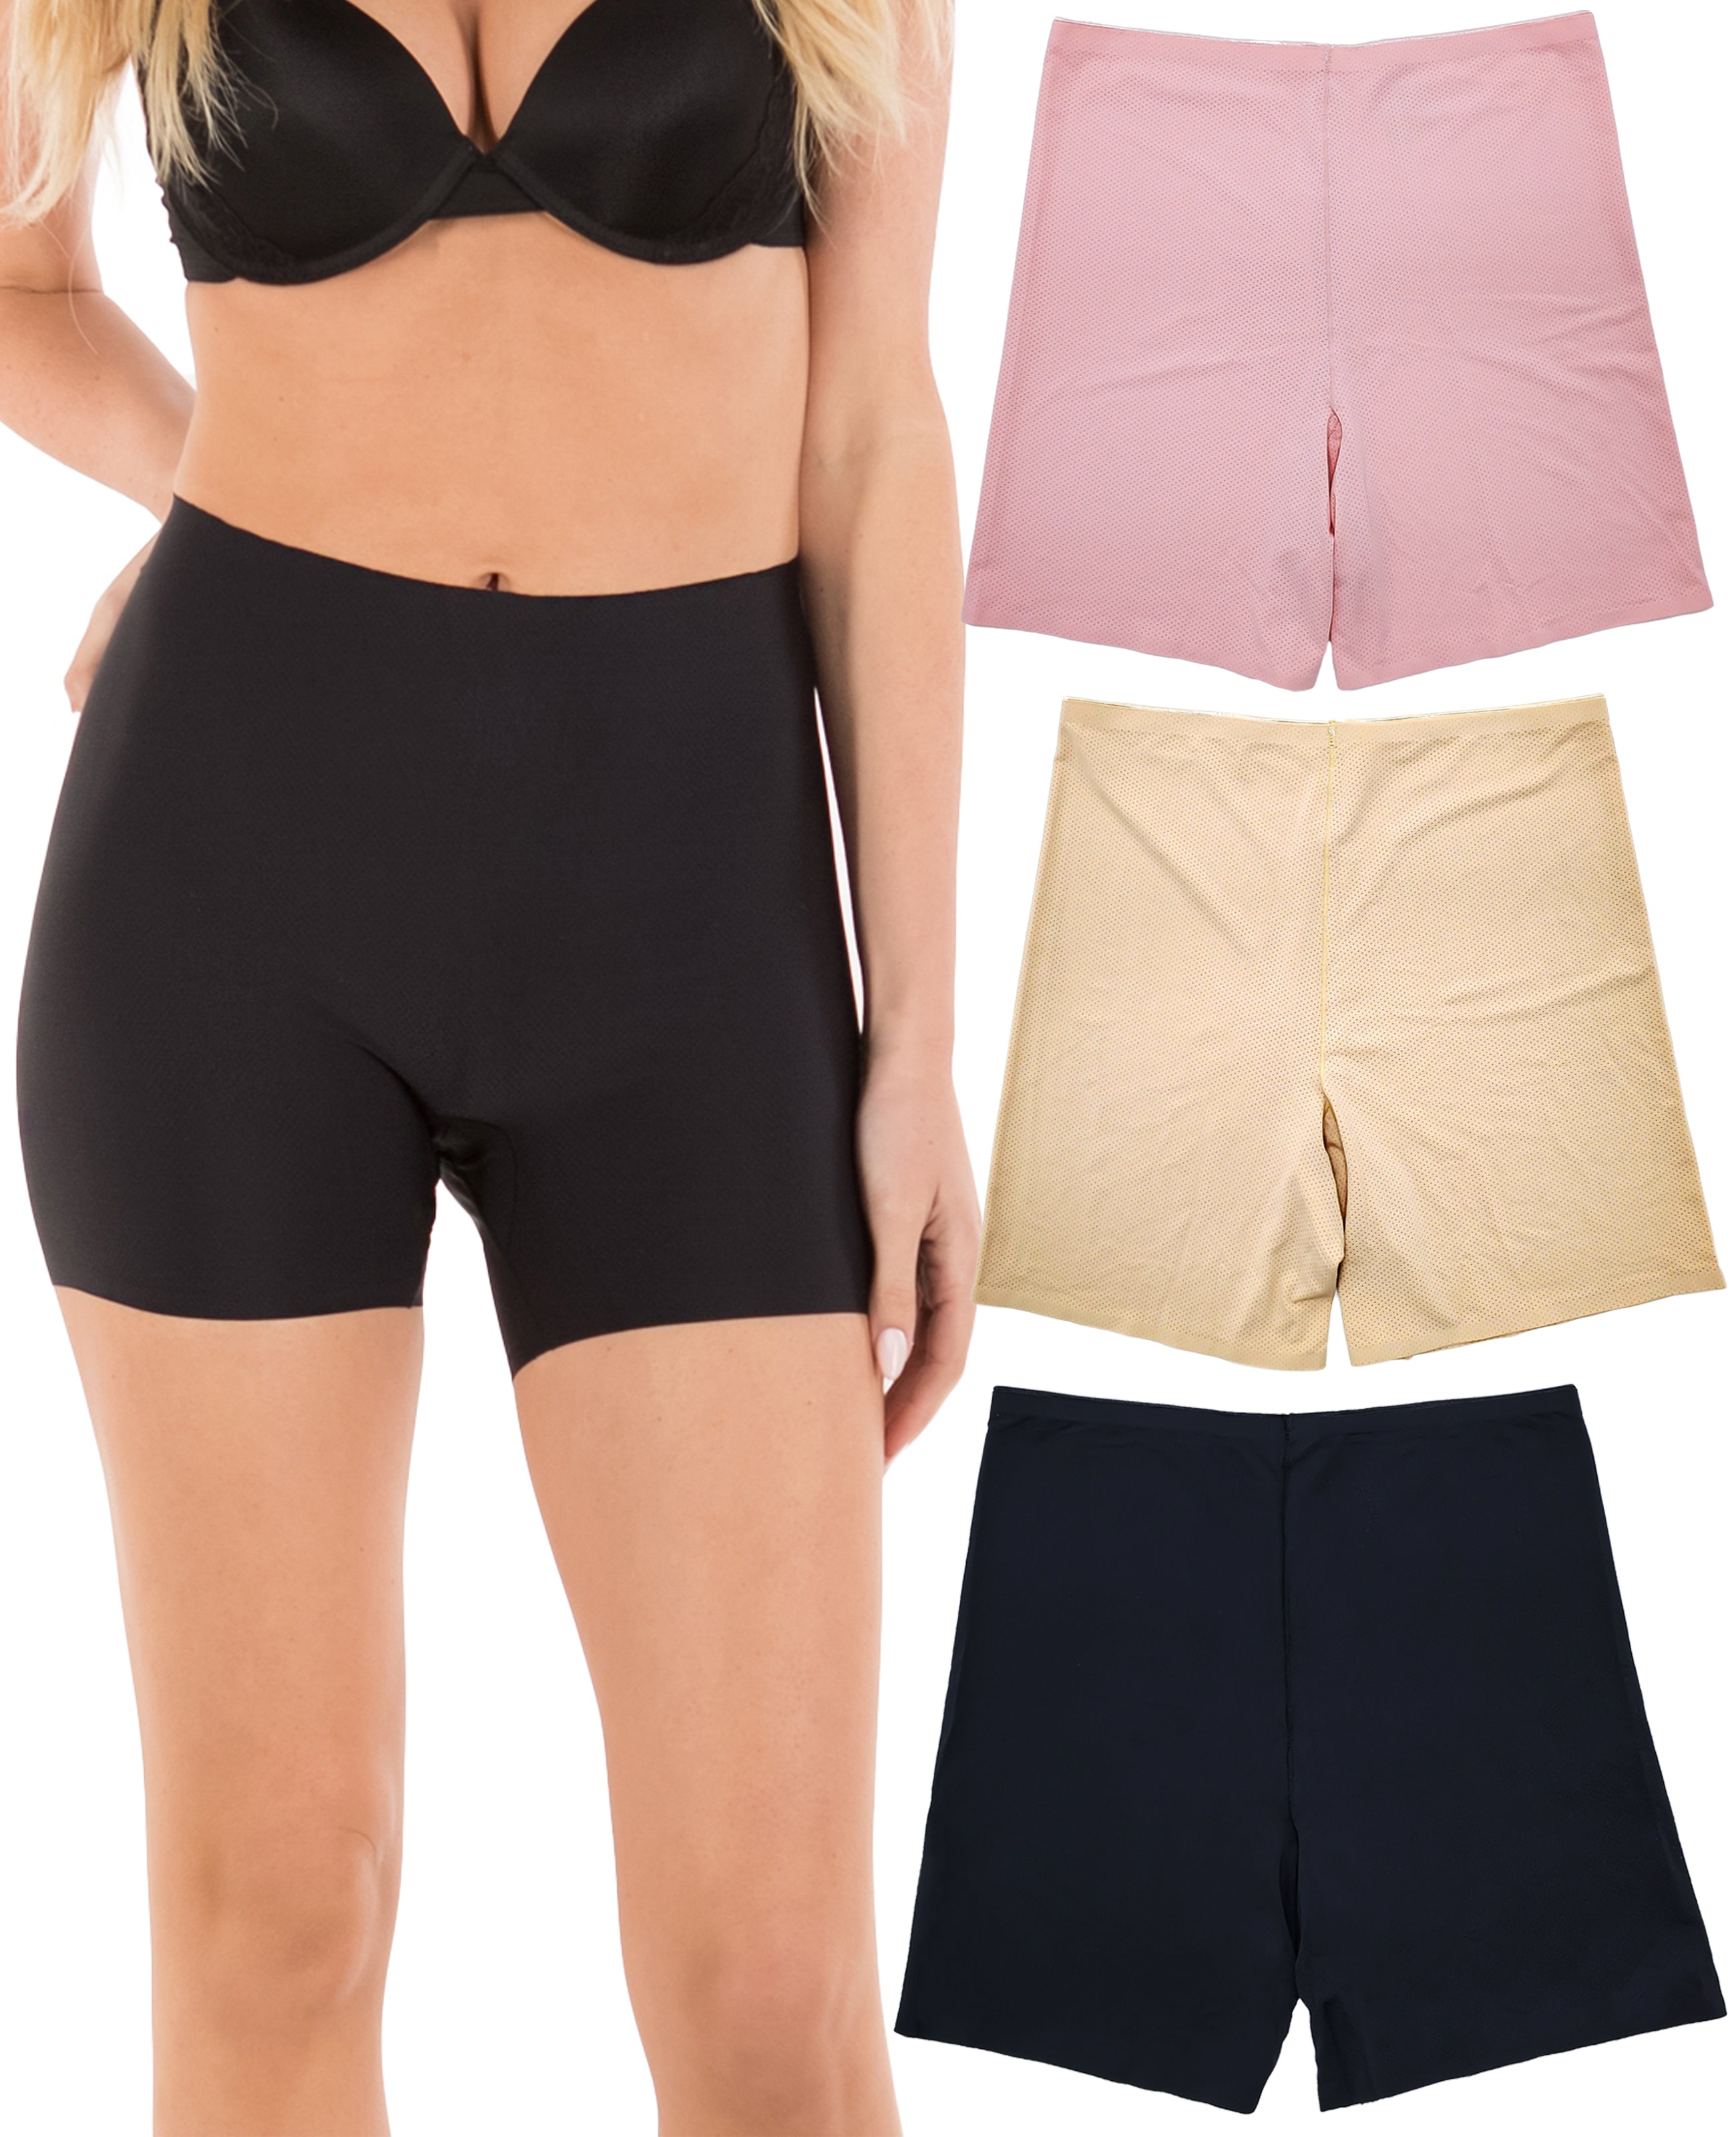 Buy Women's Boyshort Panties No Panty Lines- Free Size(Pack of 2) at